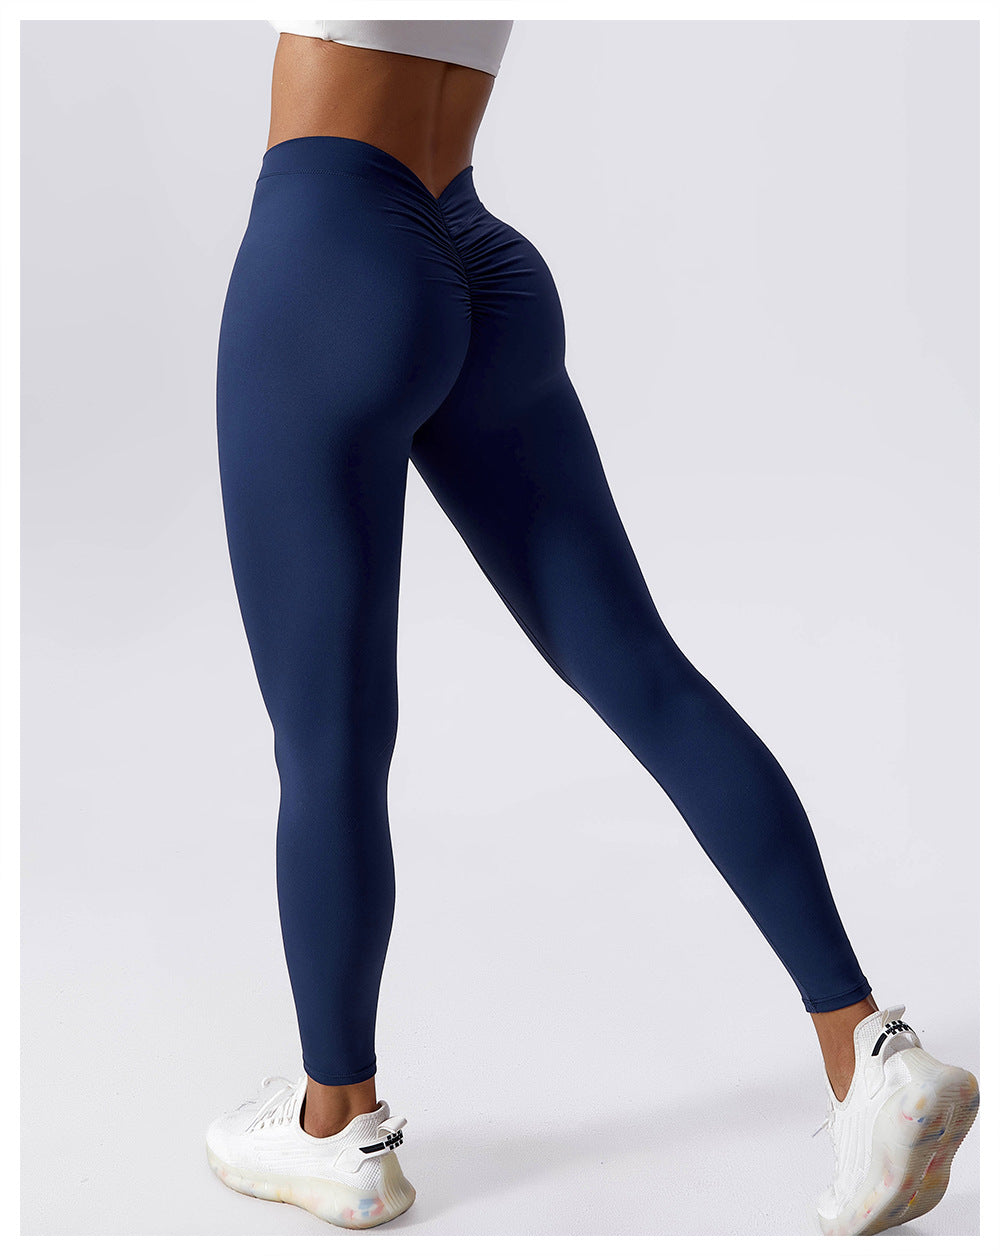 Brushed Gym Pants Women's Sports Pants Tight Yoga Pants 8149